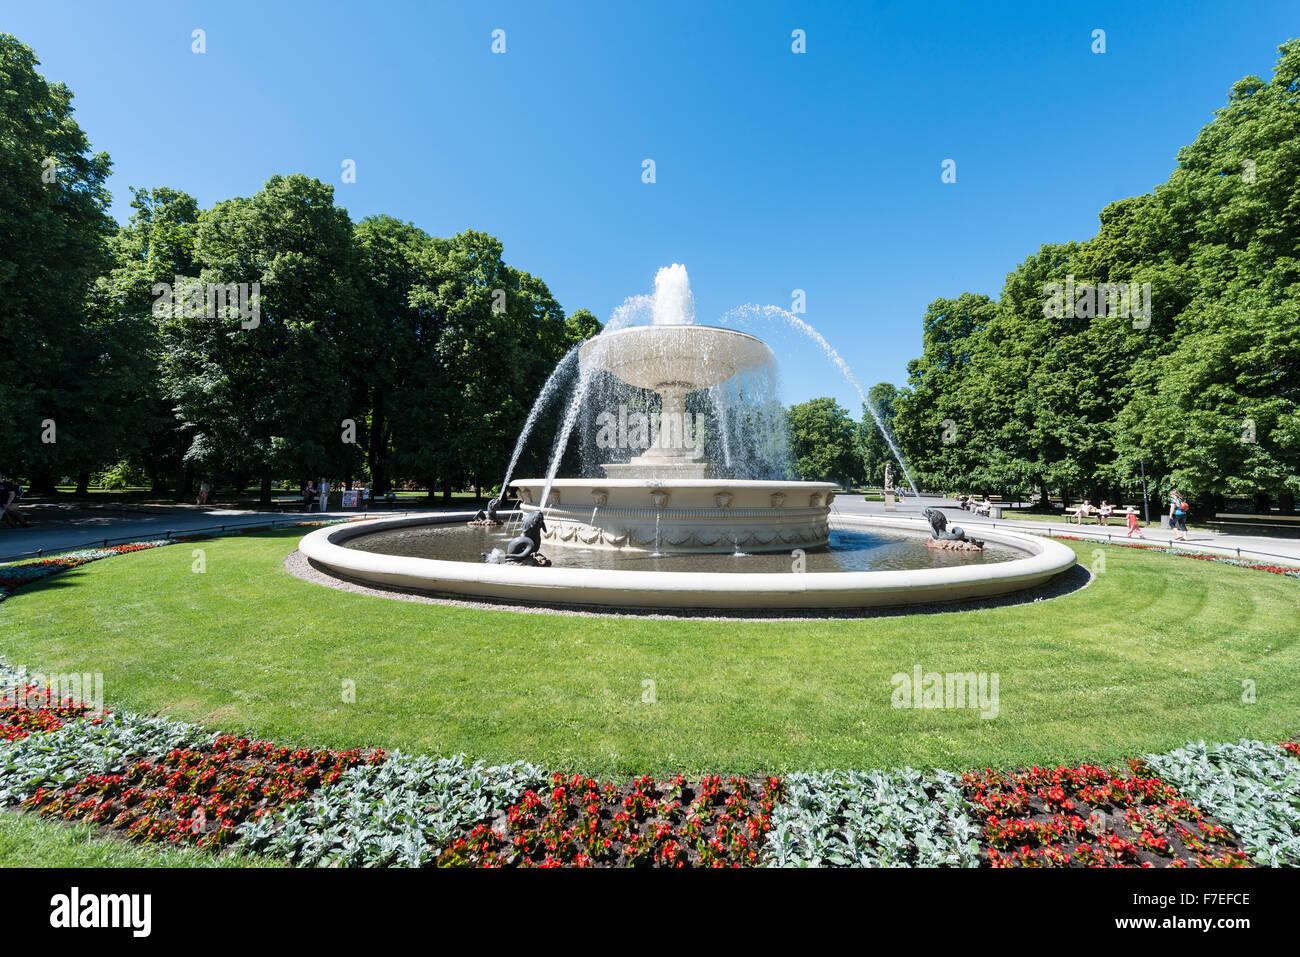 Ogród Saski Park, Pilsudski Square, historic centre, Warsaw, Mazovia Province, Poland Stock Photo